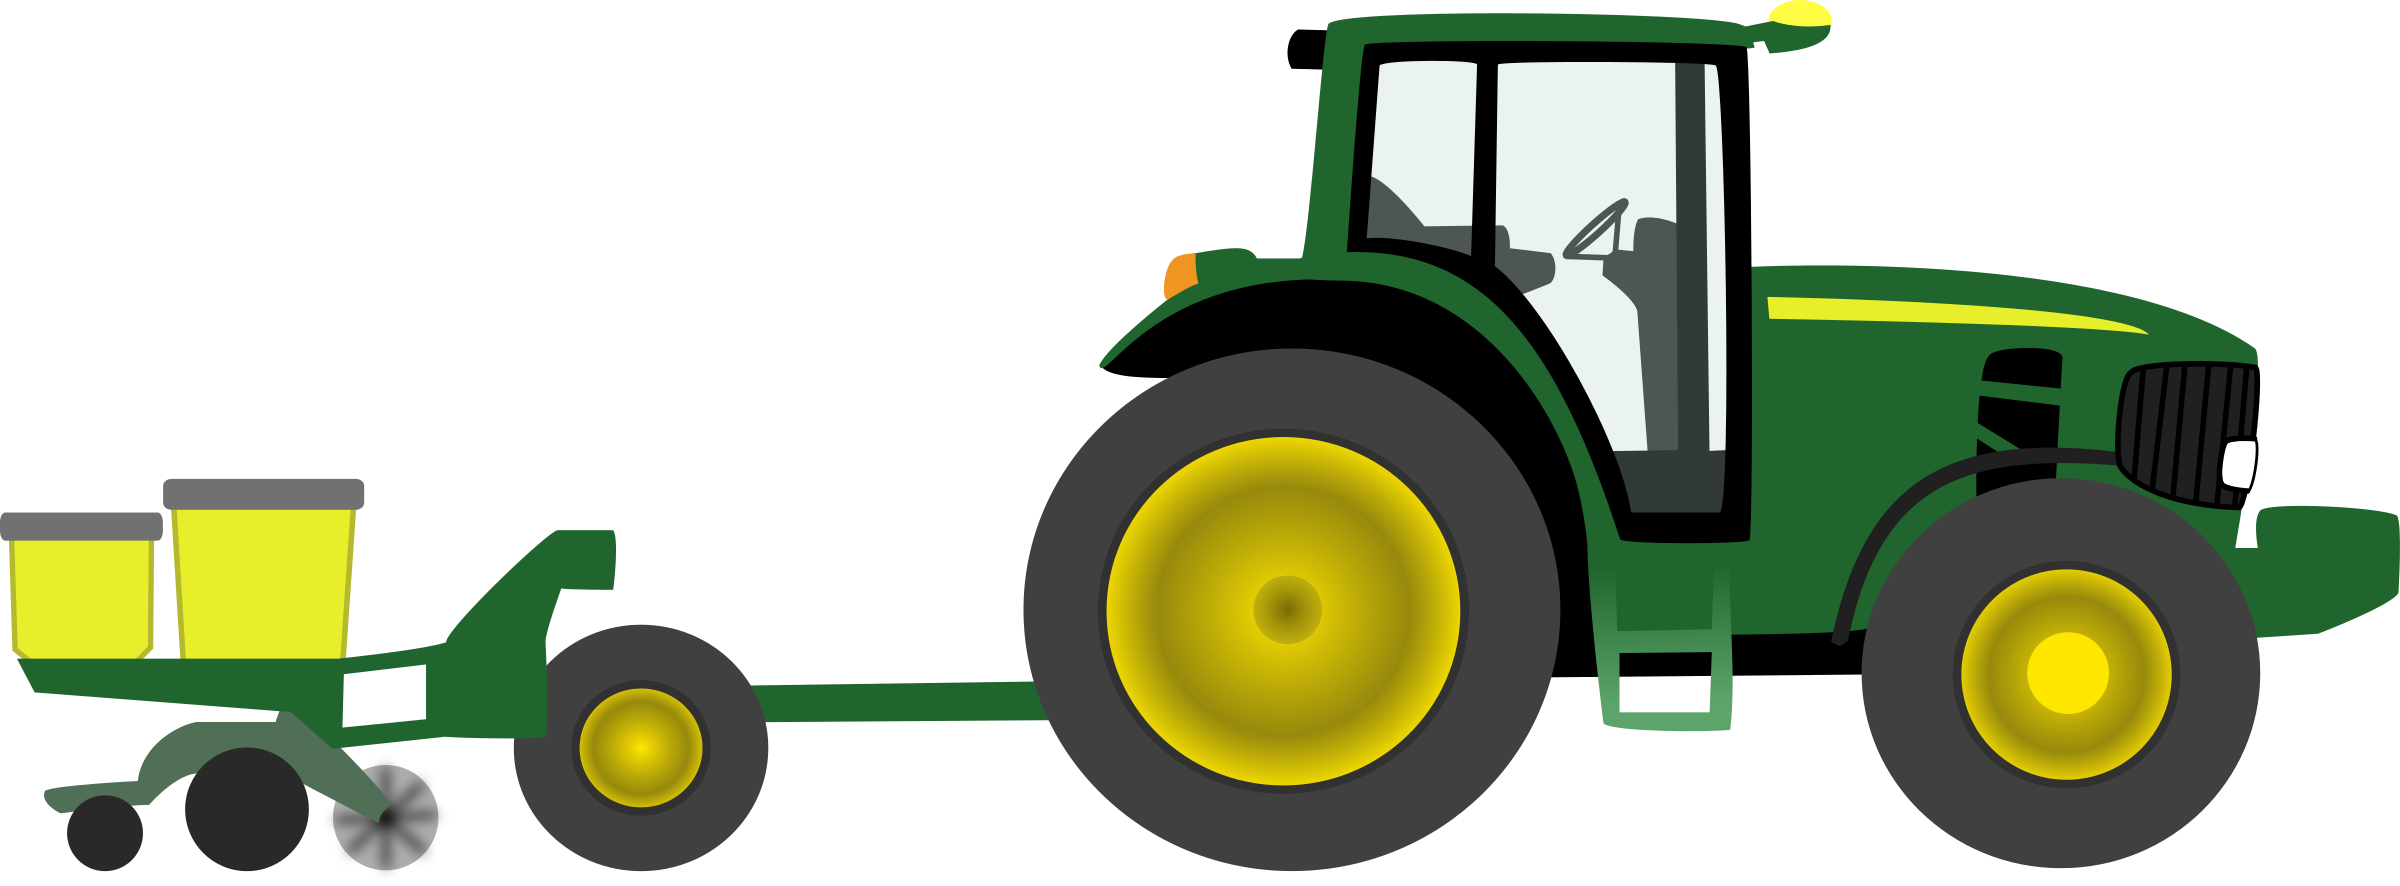 Green tractor clip art john d - John Deere Tractor Clipart